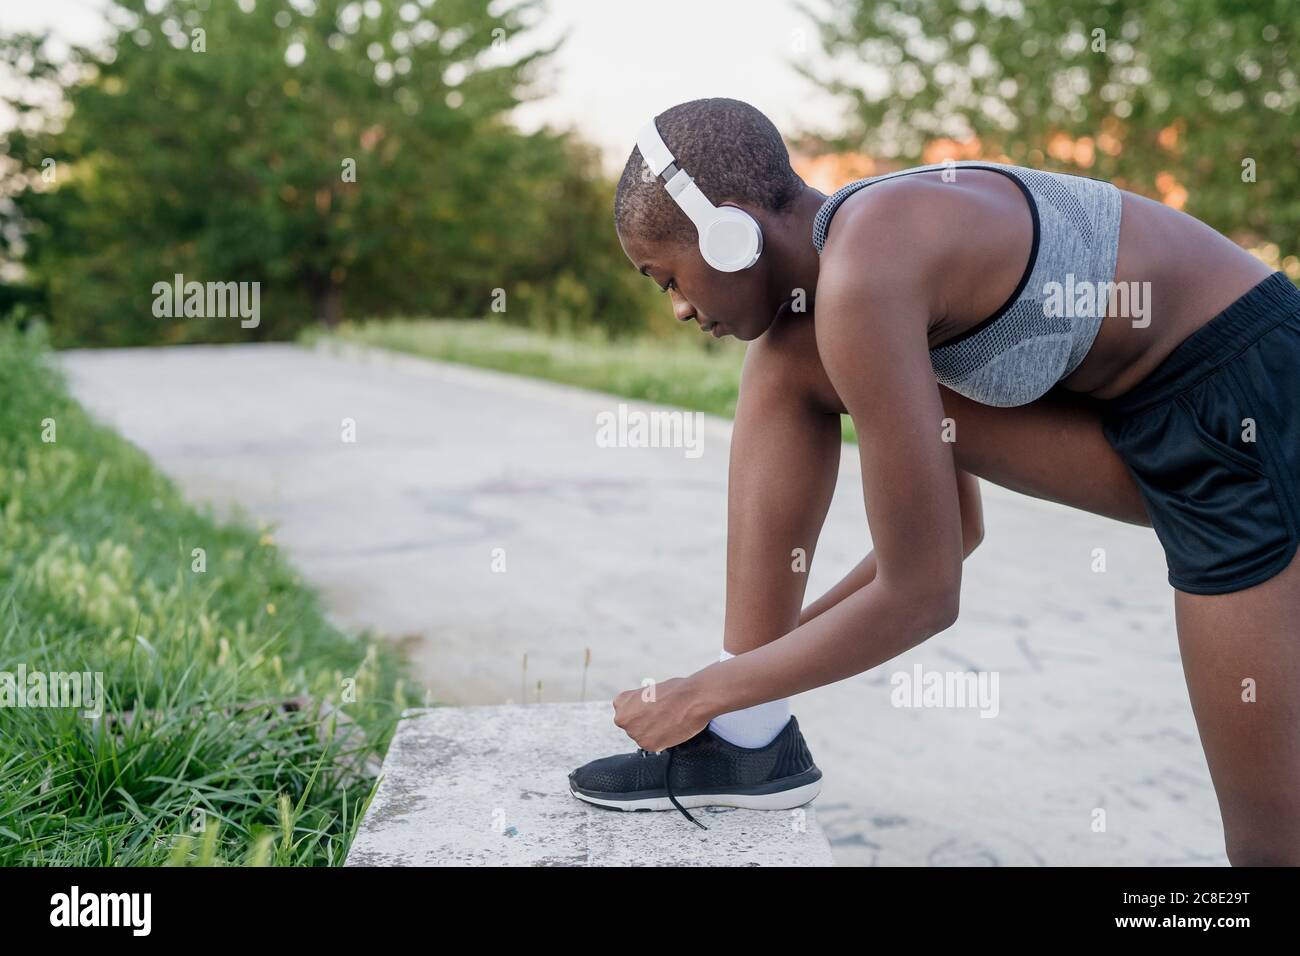 Female athlete wearing headphones tying shoelace on retaining wall in park Stock Photo